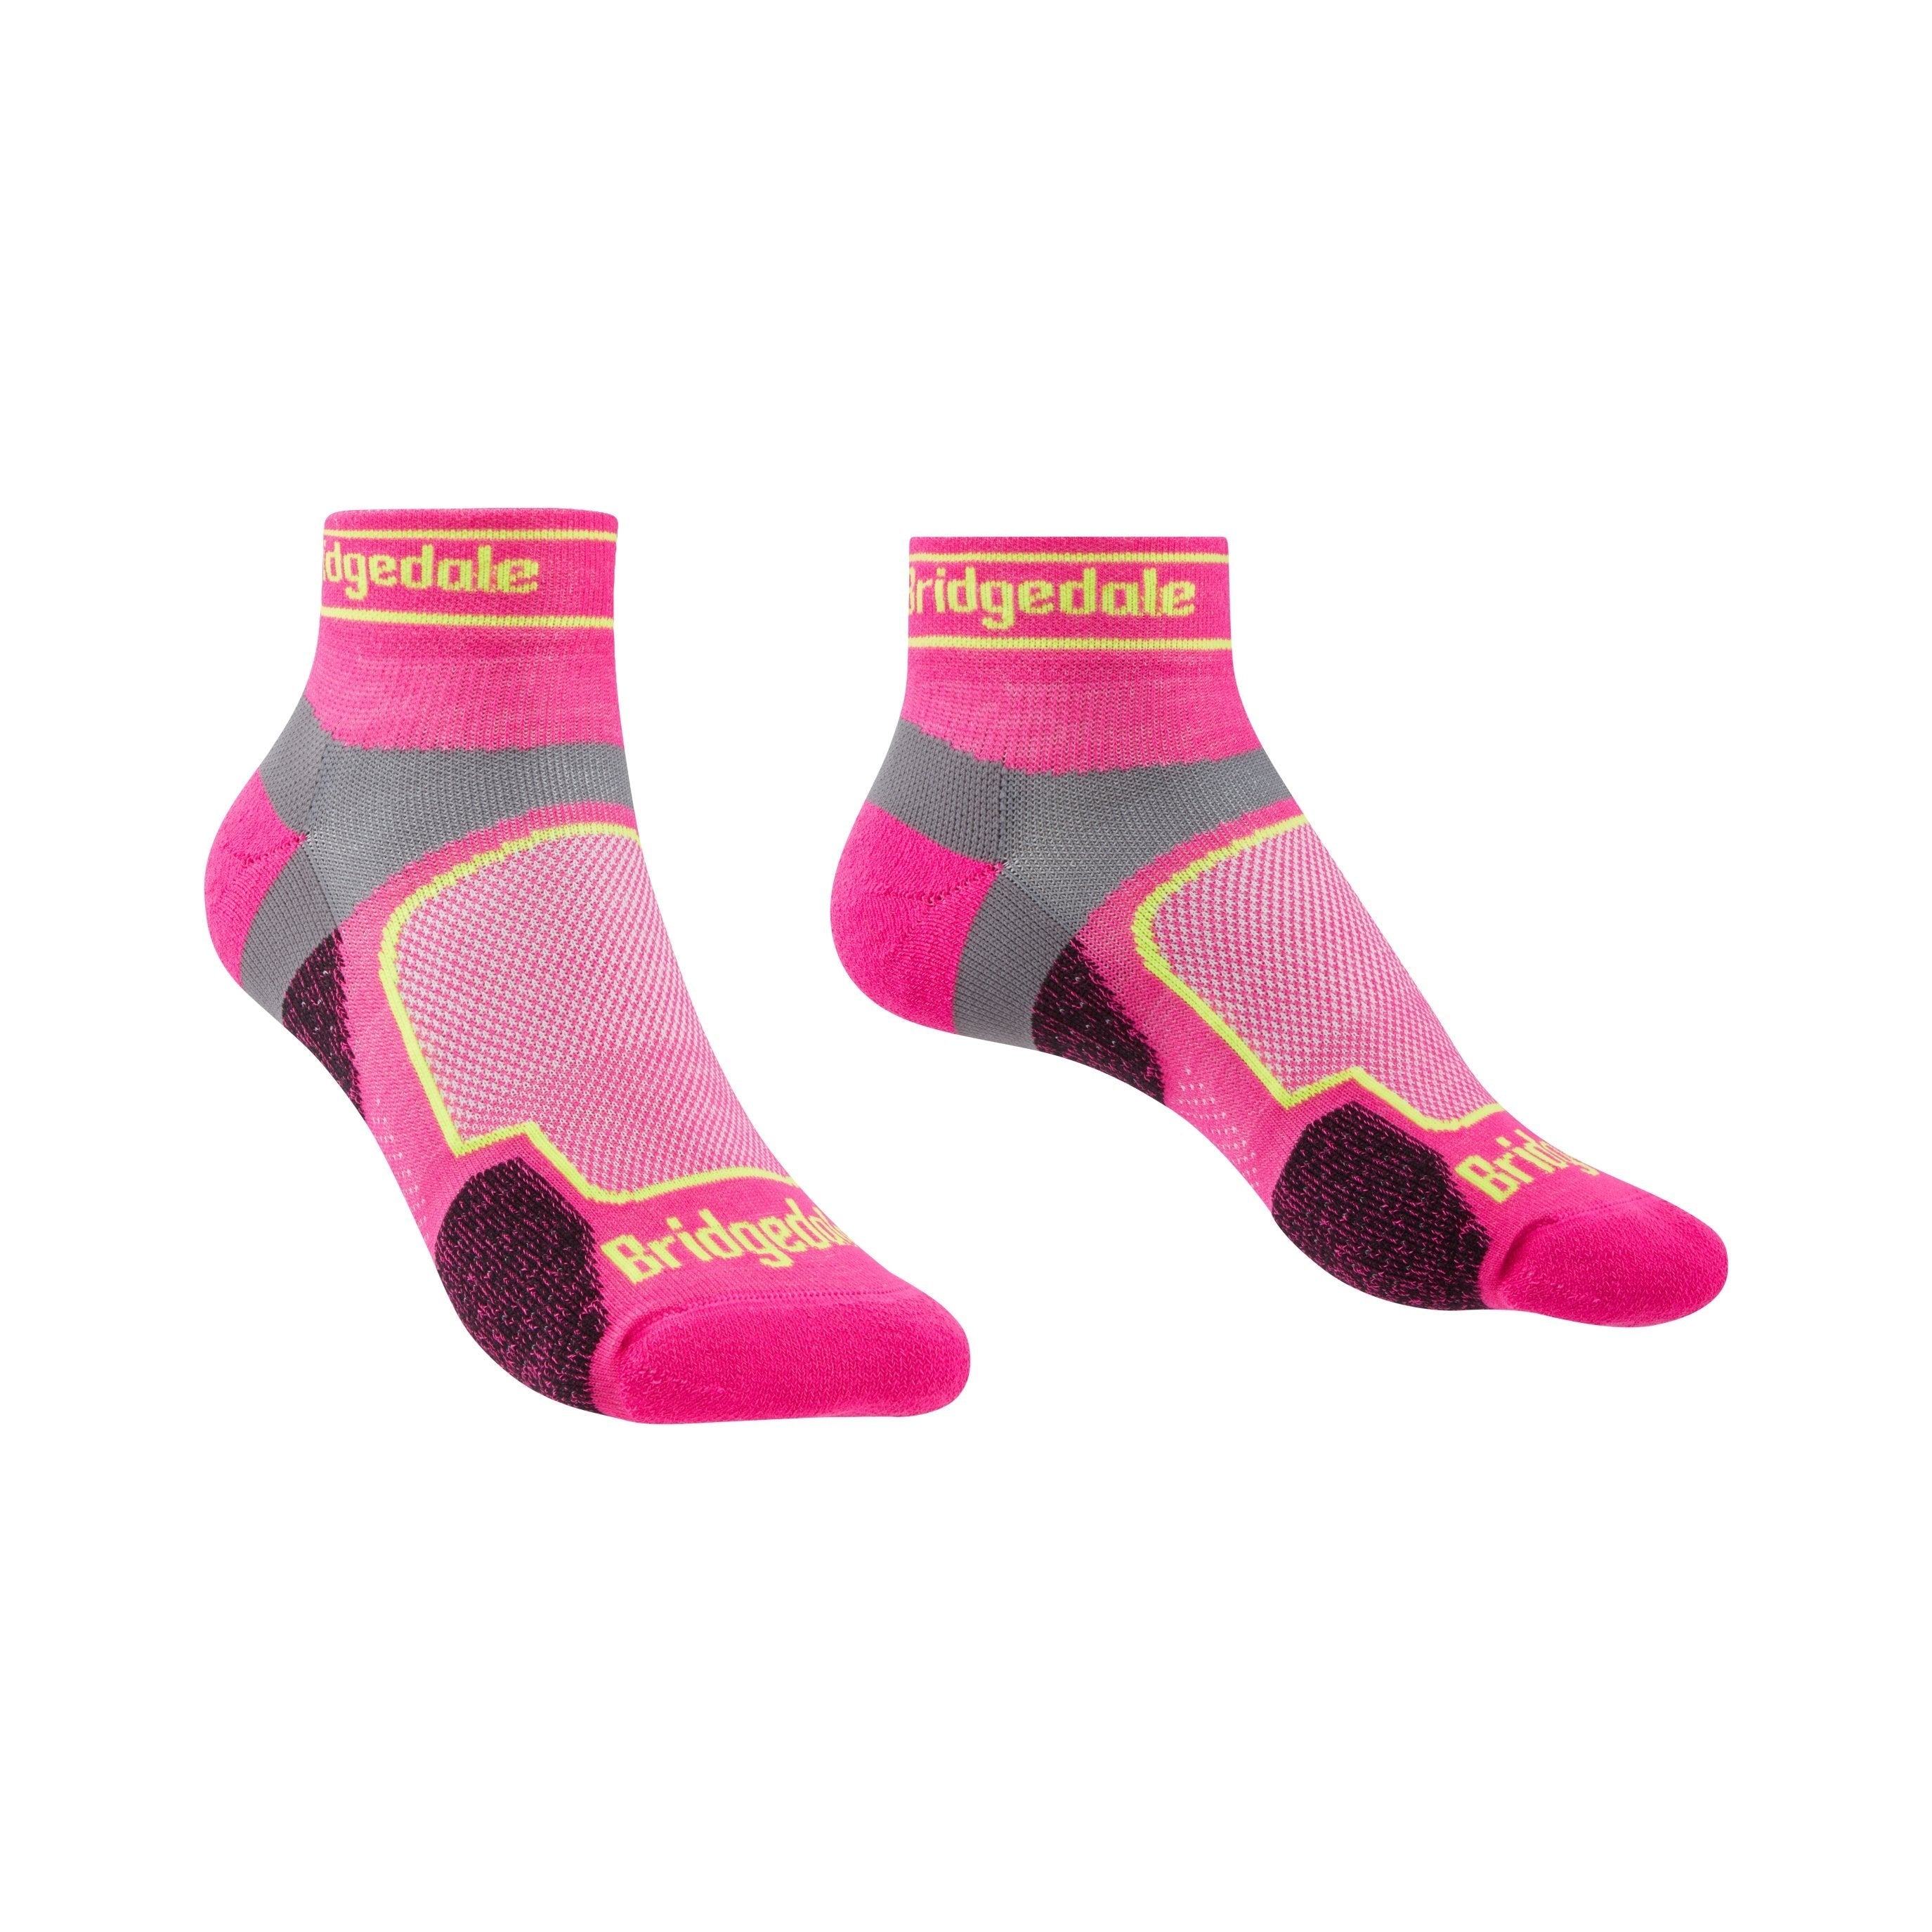 Bridgedale Trail Run UL T2 Low Socks (Women's) - Pink - Find Your Feet Australia Hobart Launceston Tasmania